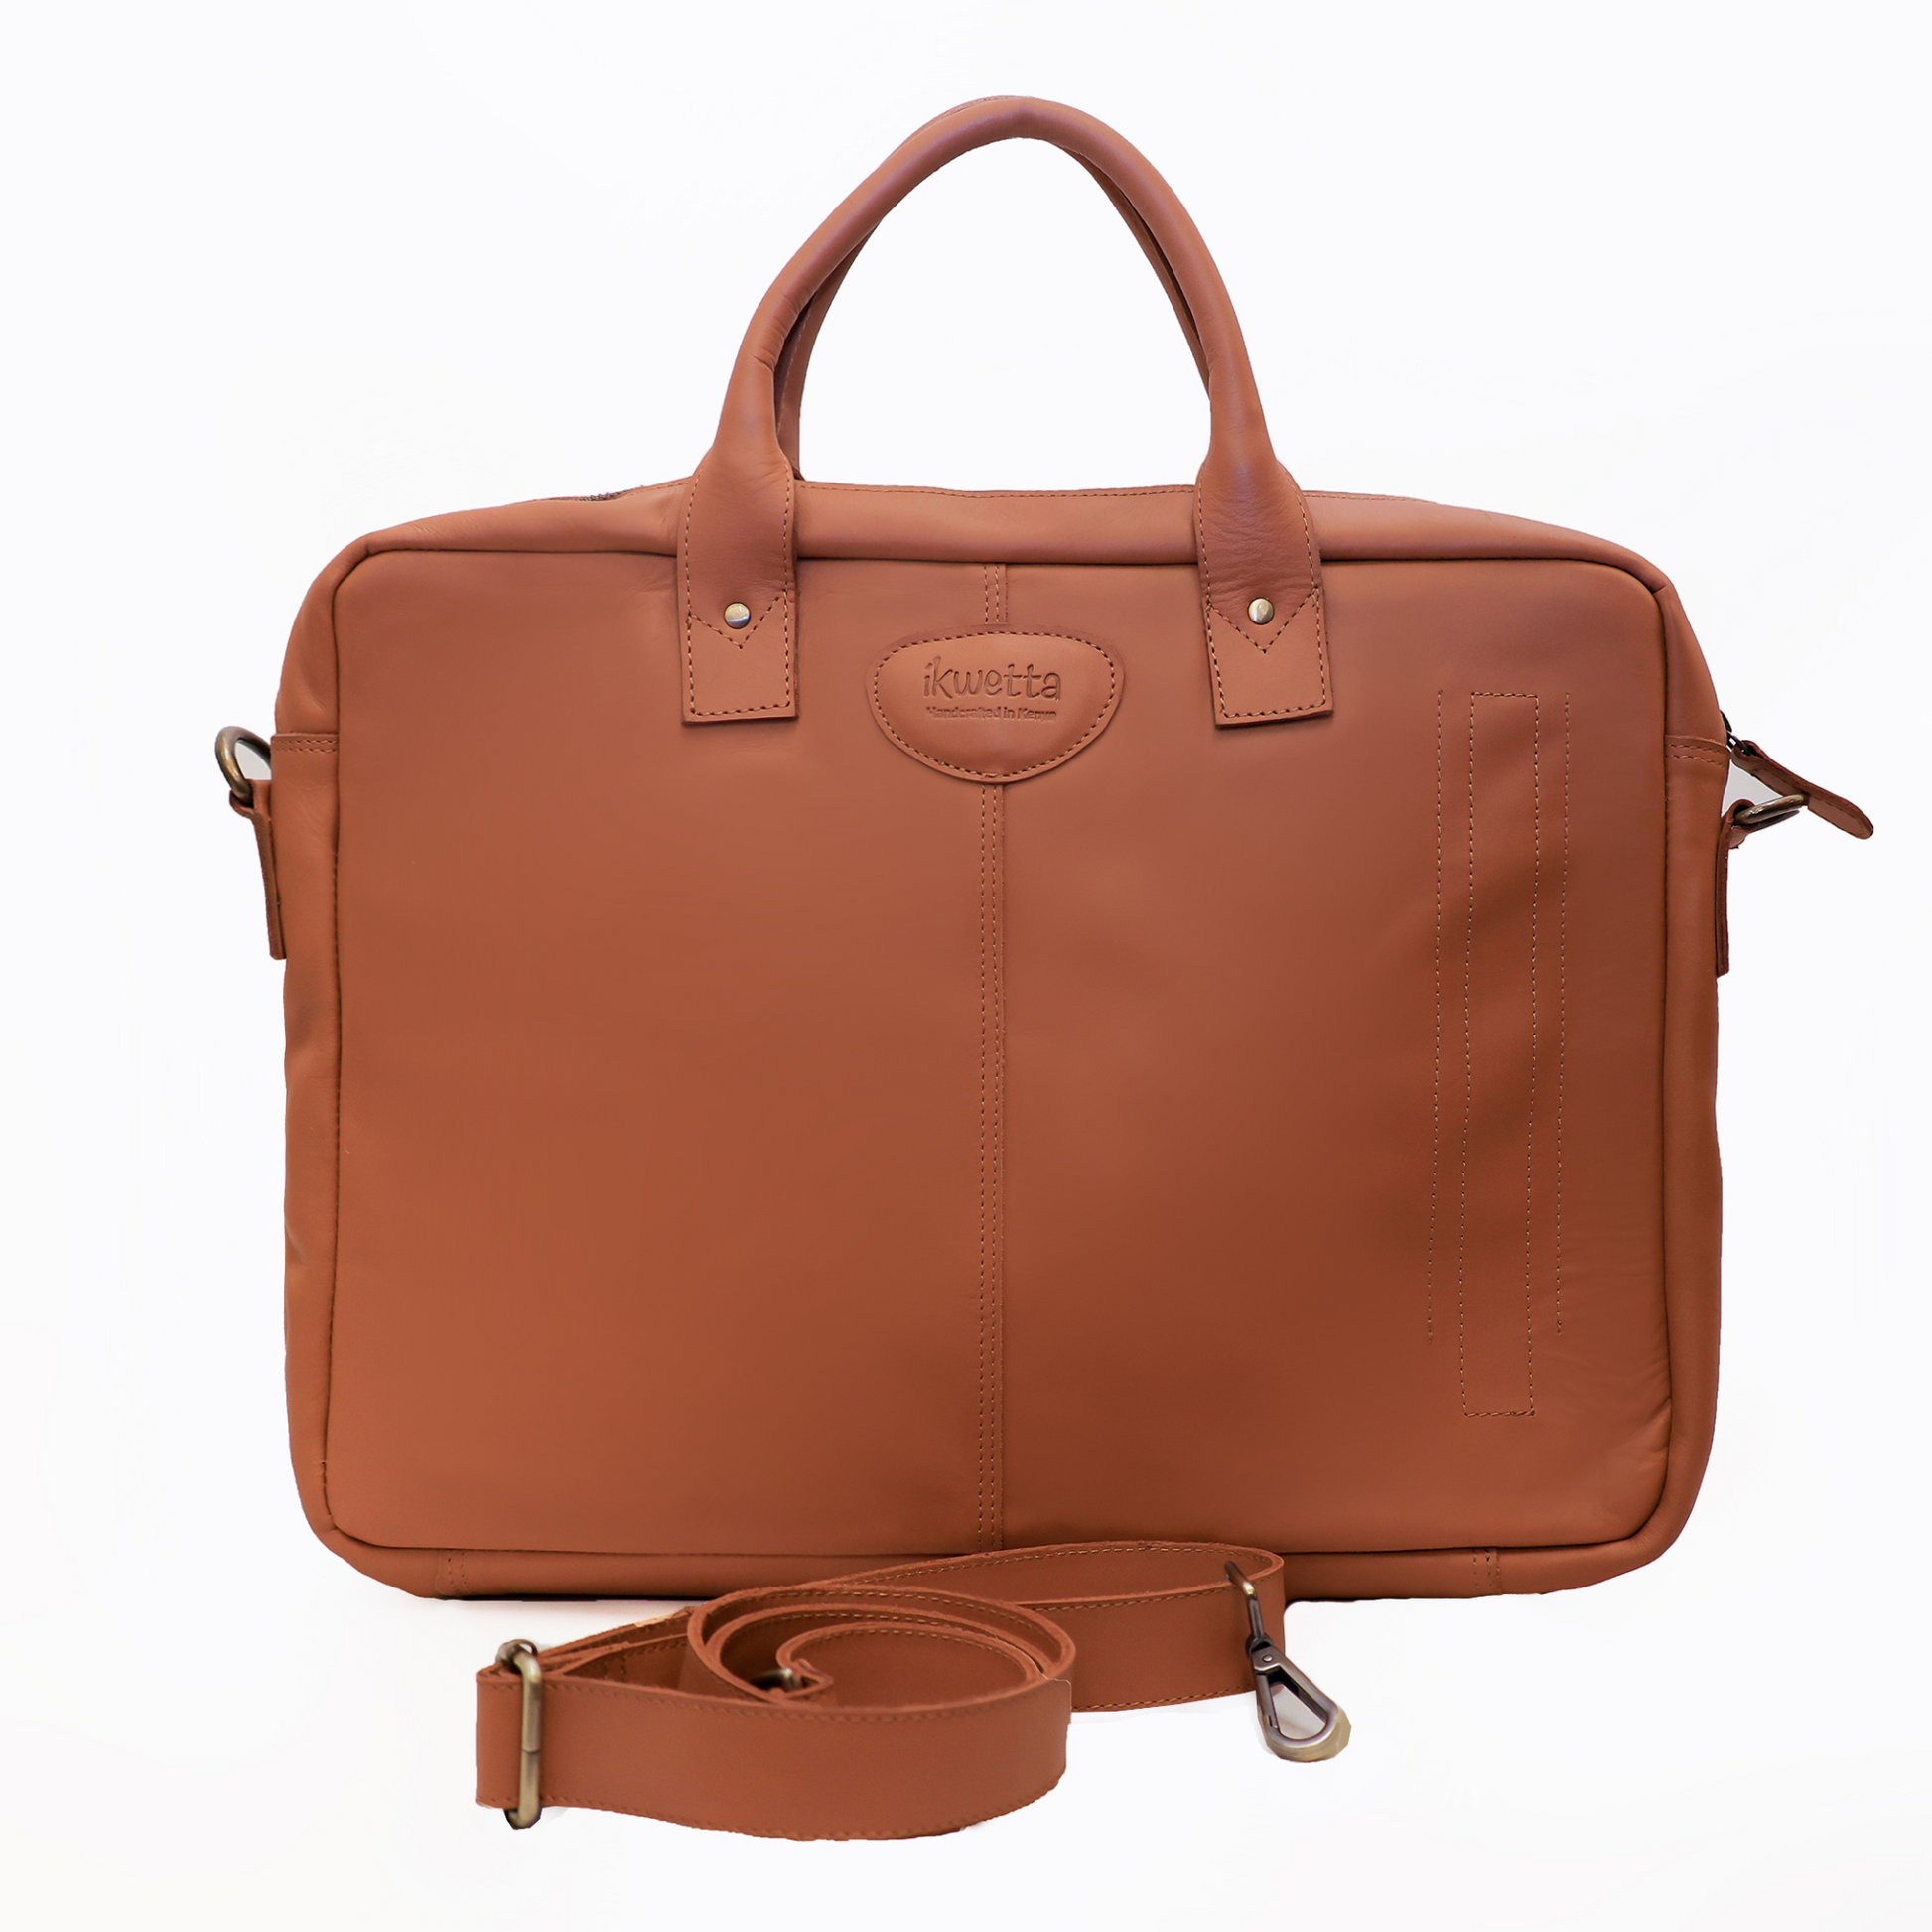 Louis laptop bag in tan crunch leather